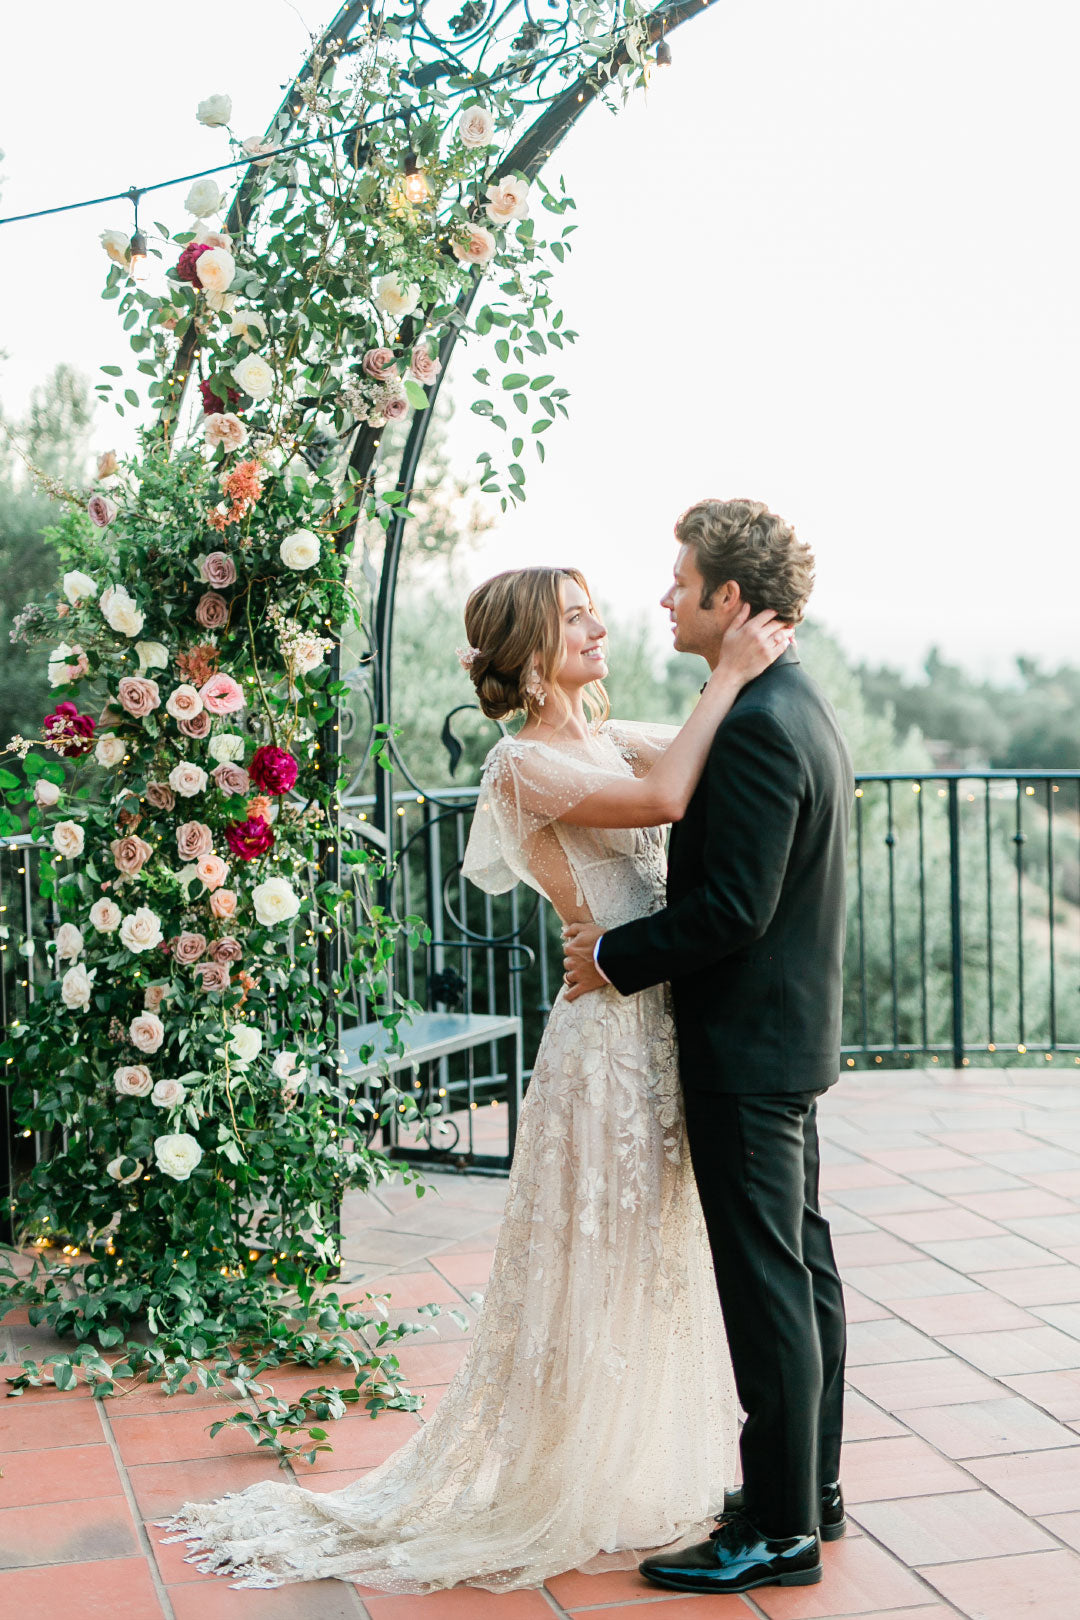 Bride and Groom embrace under wedding floral display